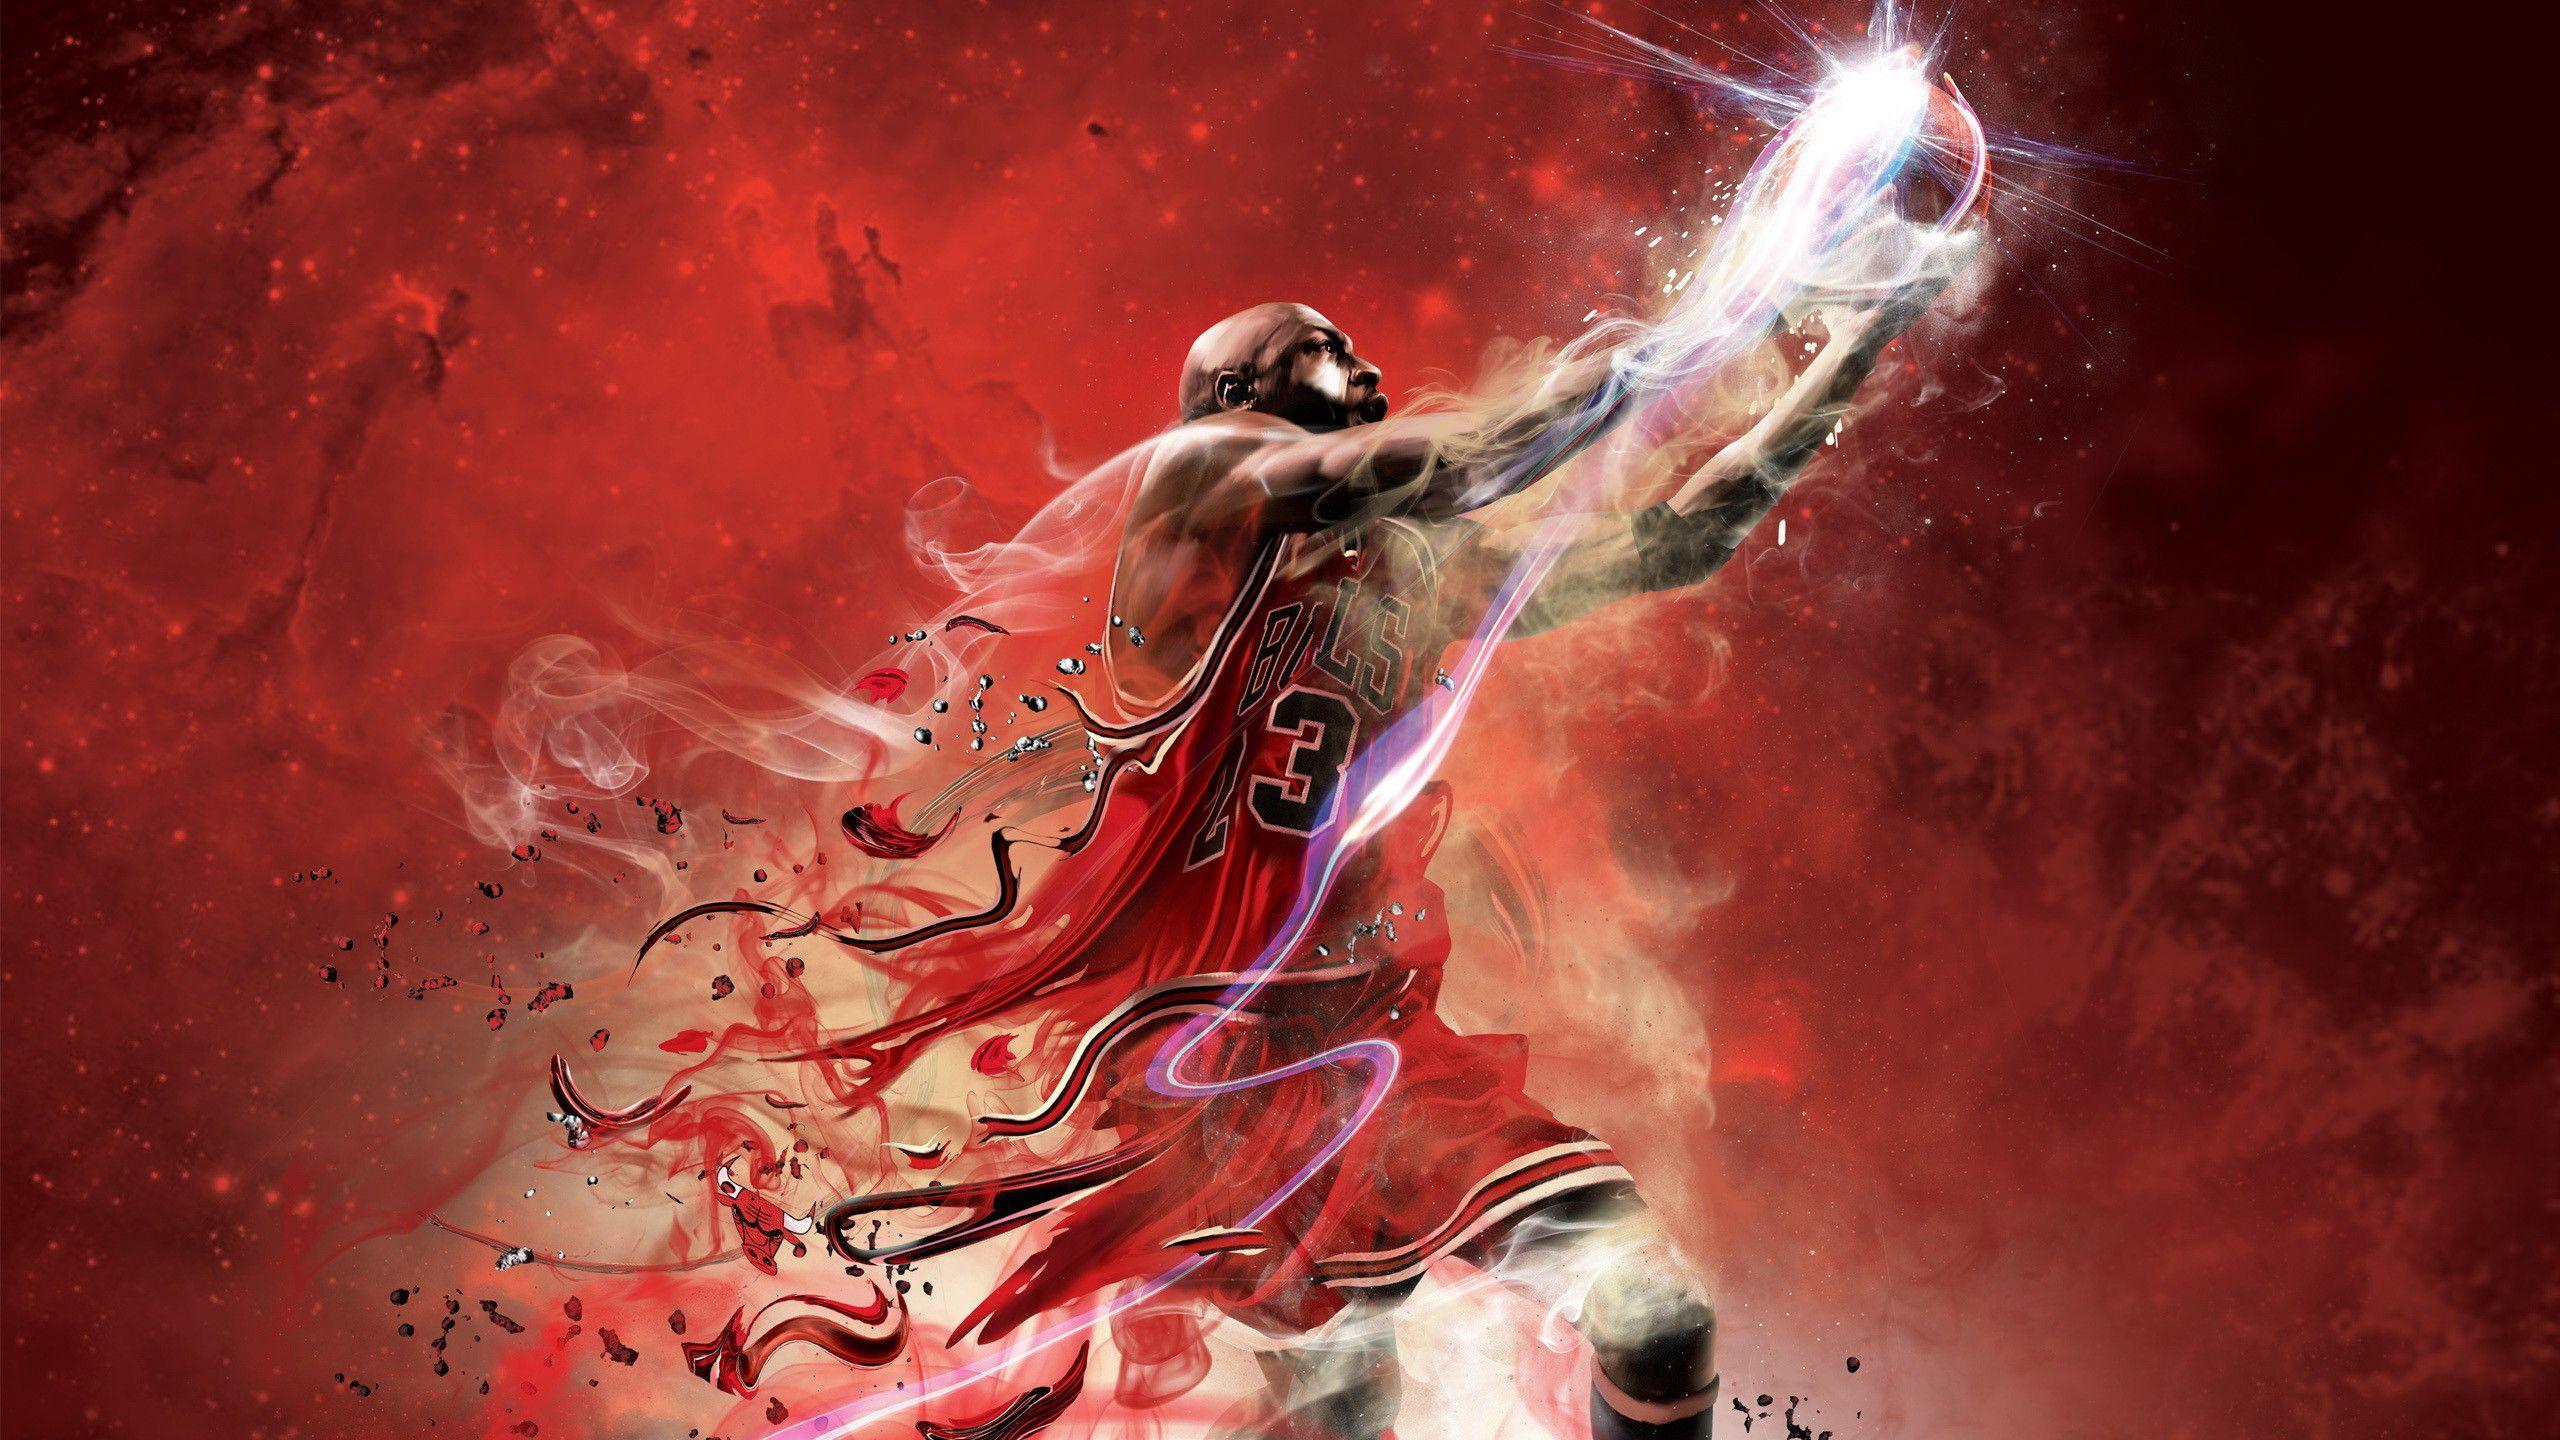 Michael Jordan Dunk Wallpaper Image. Nba wallpaper, Basketball